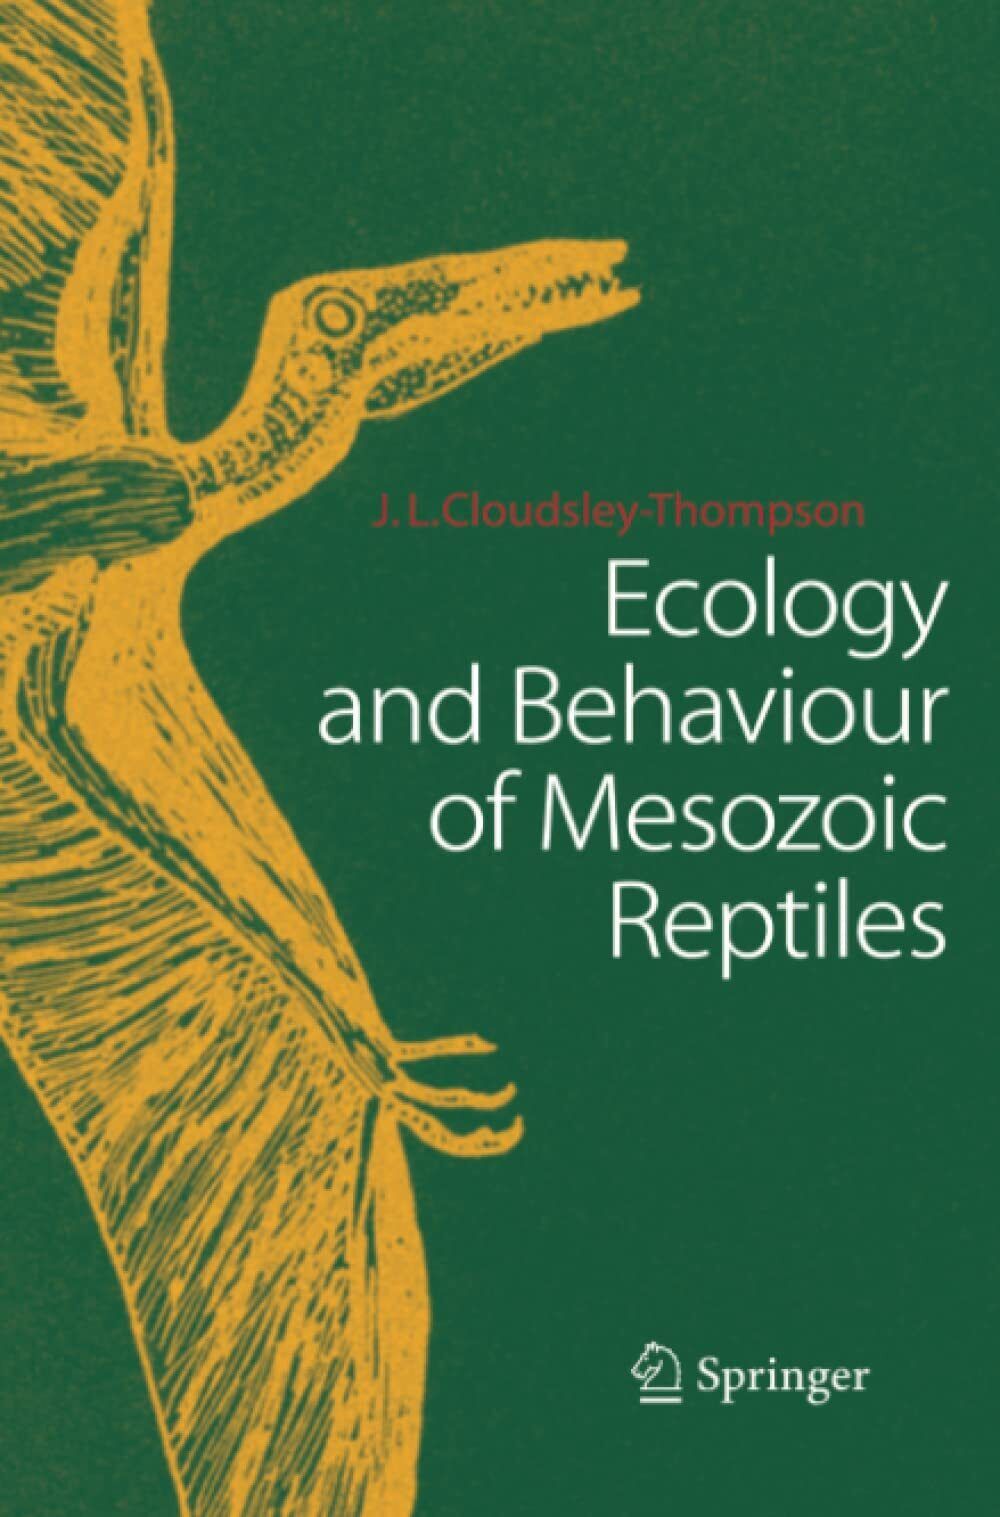 Ecology and Behaviour of Mesozoic Reptiles - John L. Cloudsley-Thompson - 2010